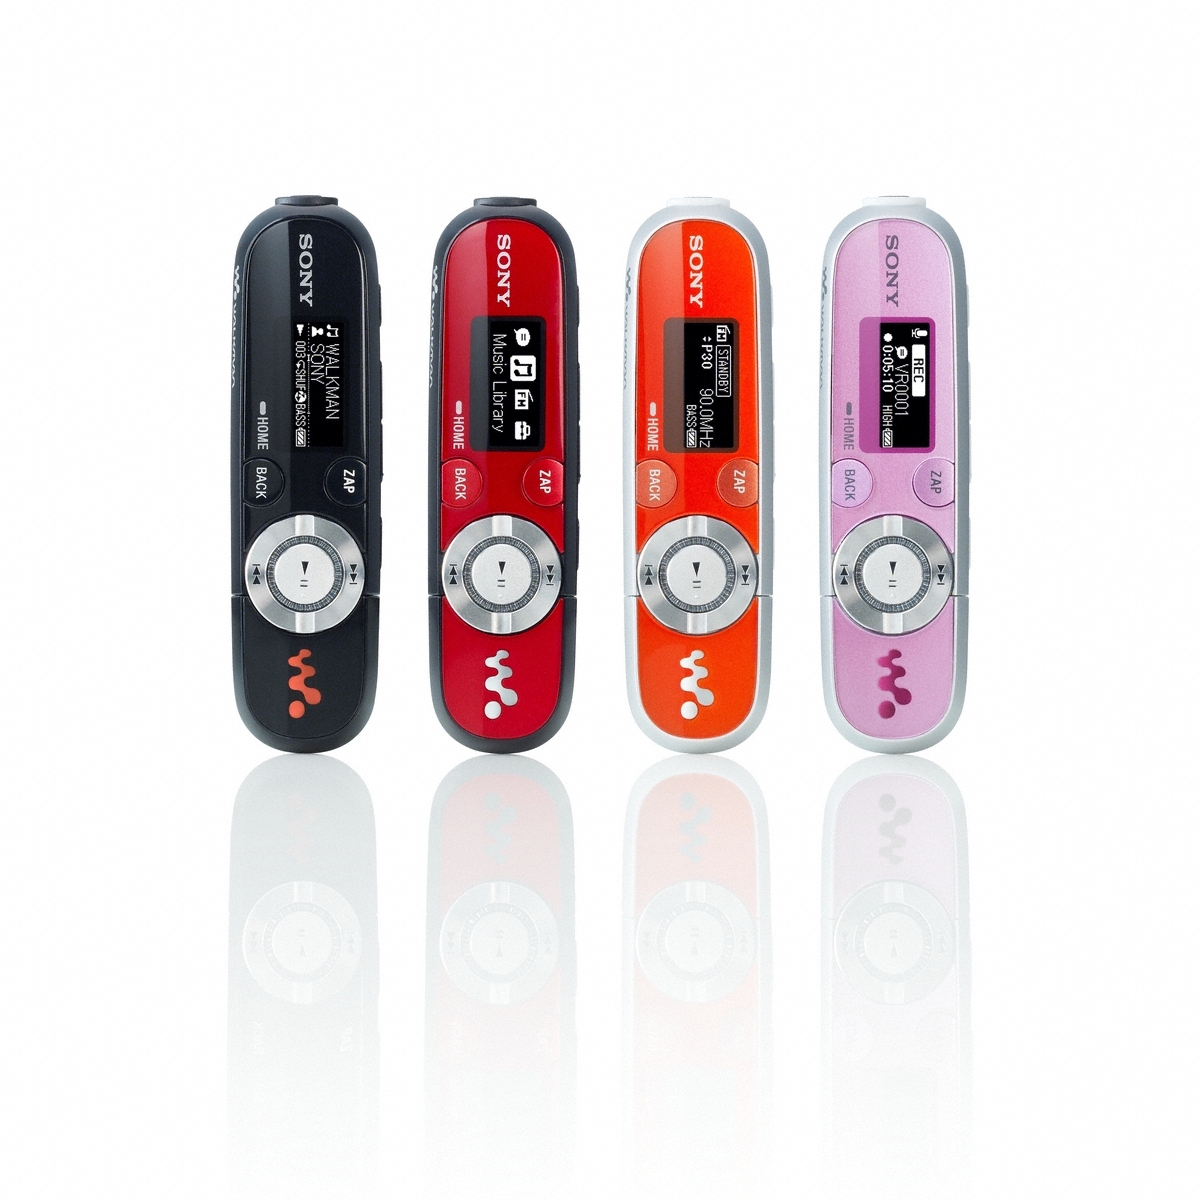 Sony Announces New Walkman E Series Video MP3 player